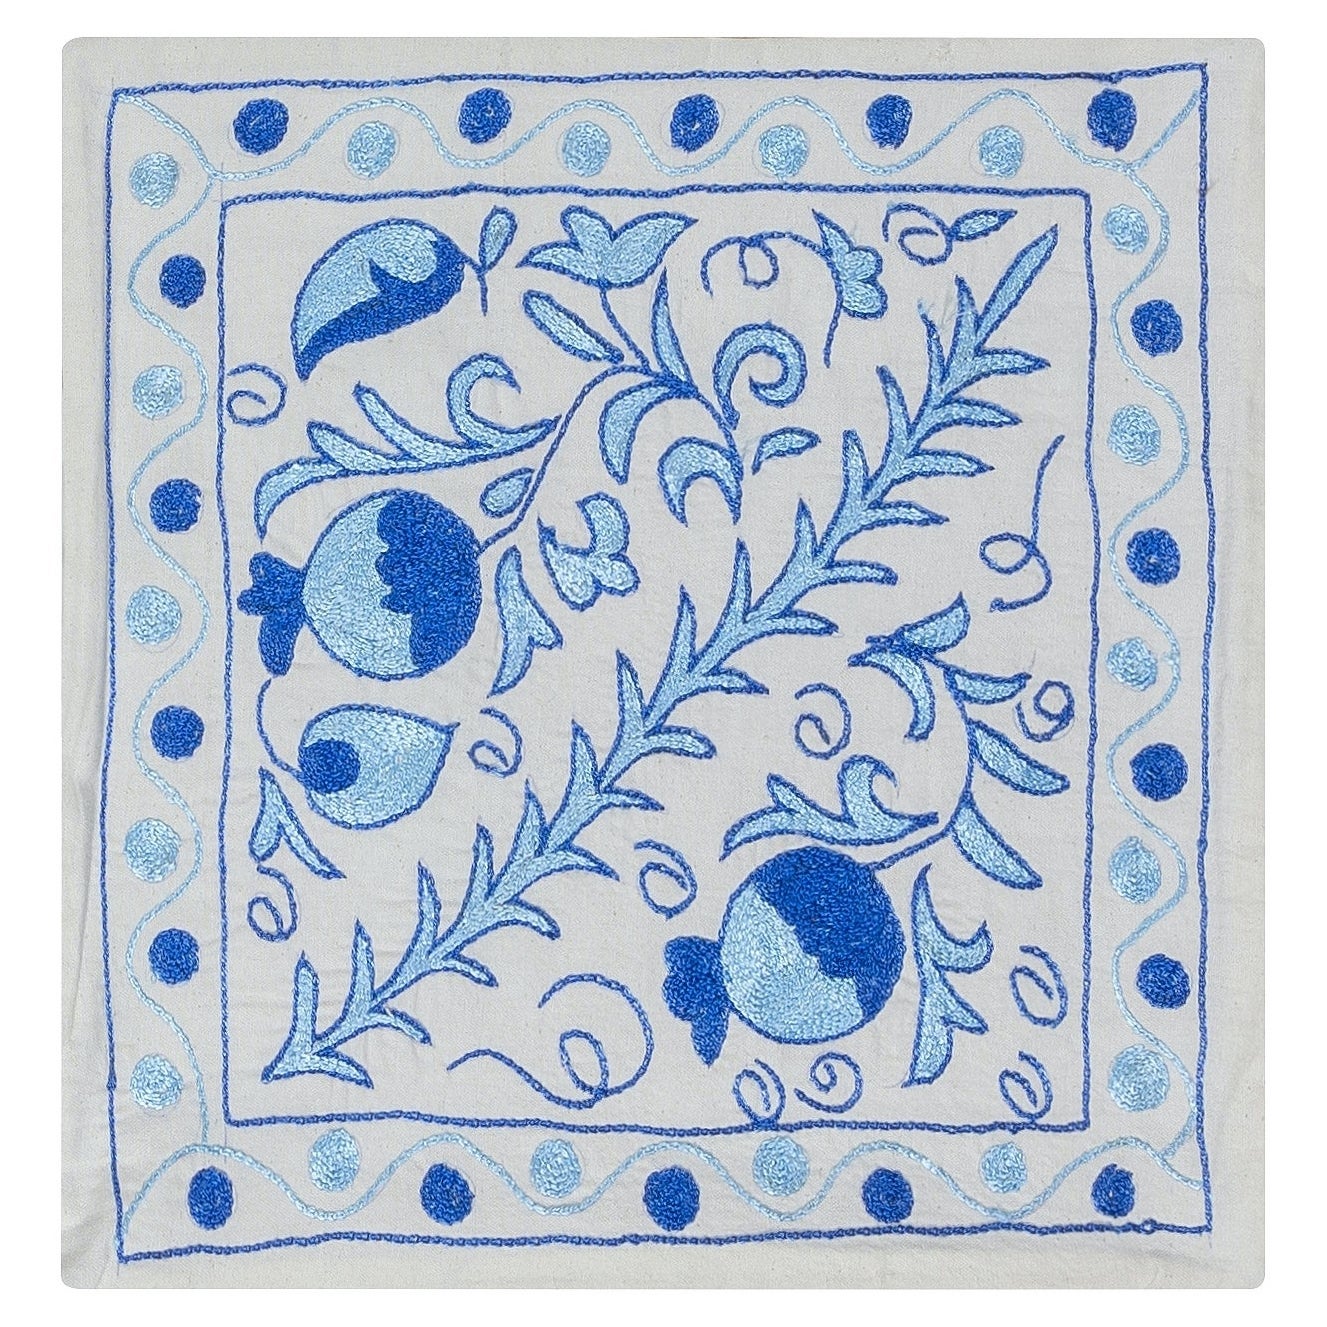 Silk Hand Embroidered Suzani Throw Pillow Cover, New Uzbek Toss Pillow